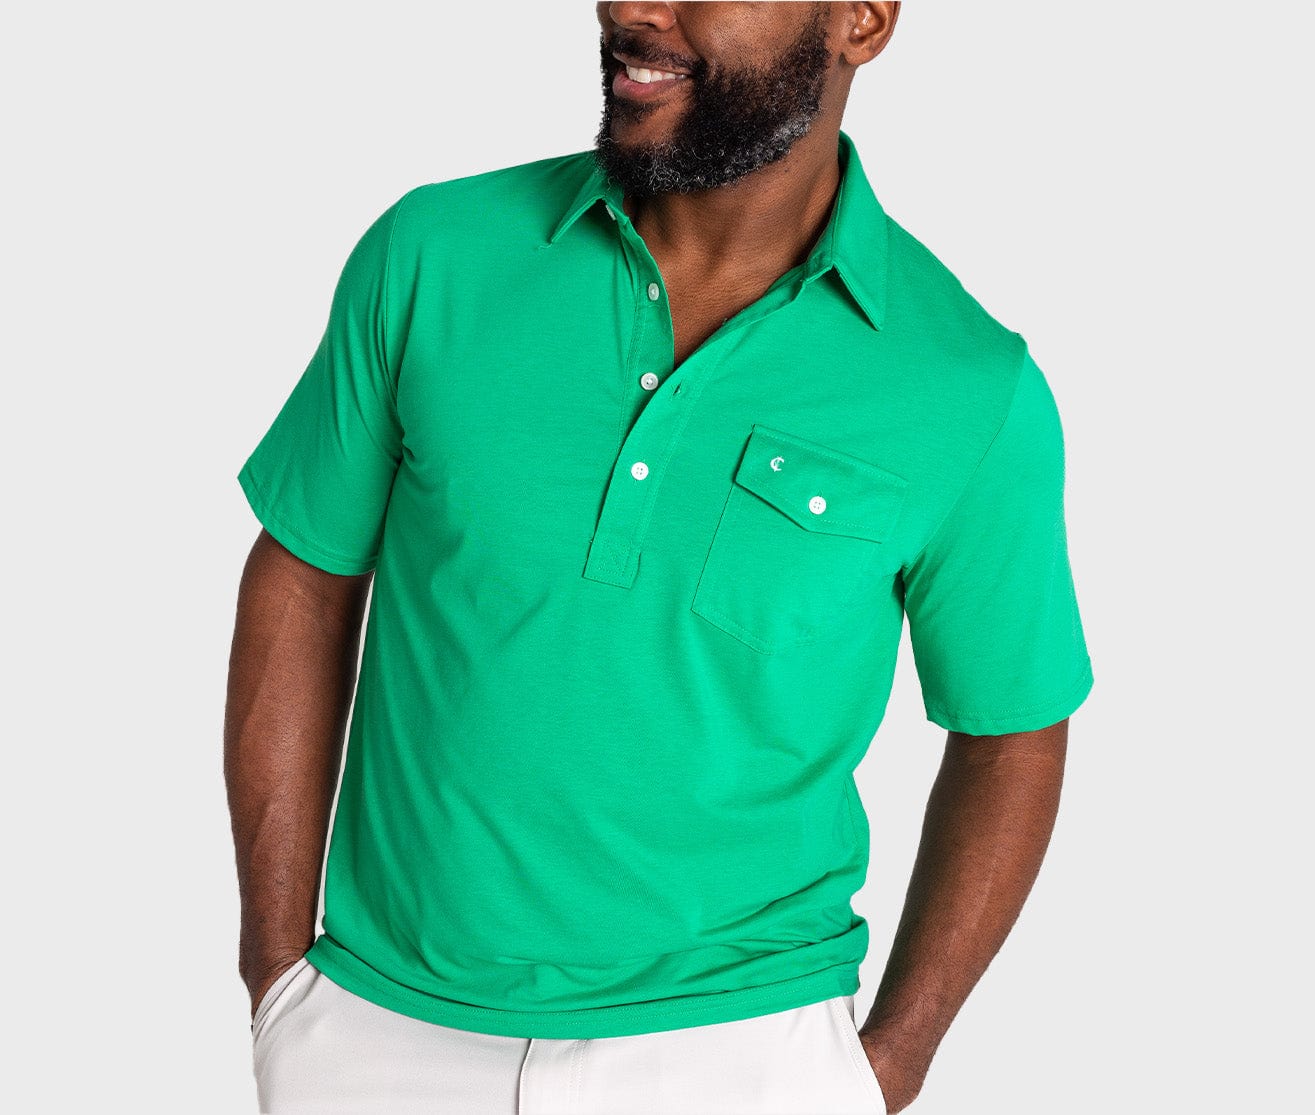 Performance Players Shirt - Golf Green - Secondary